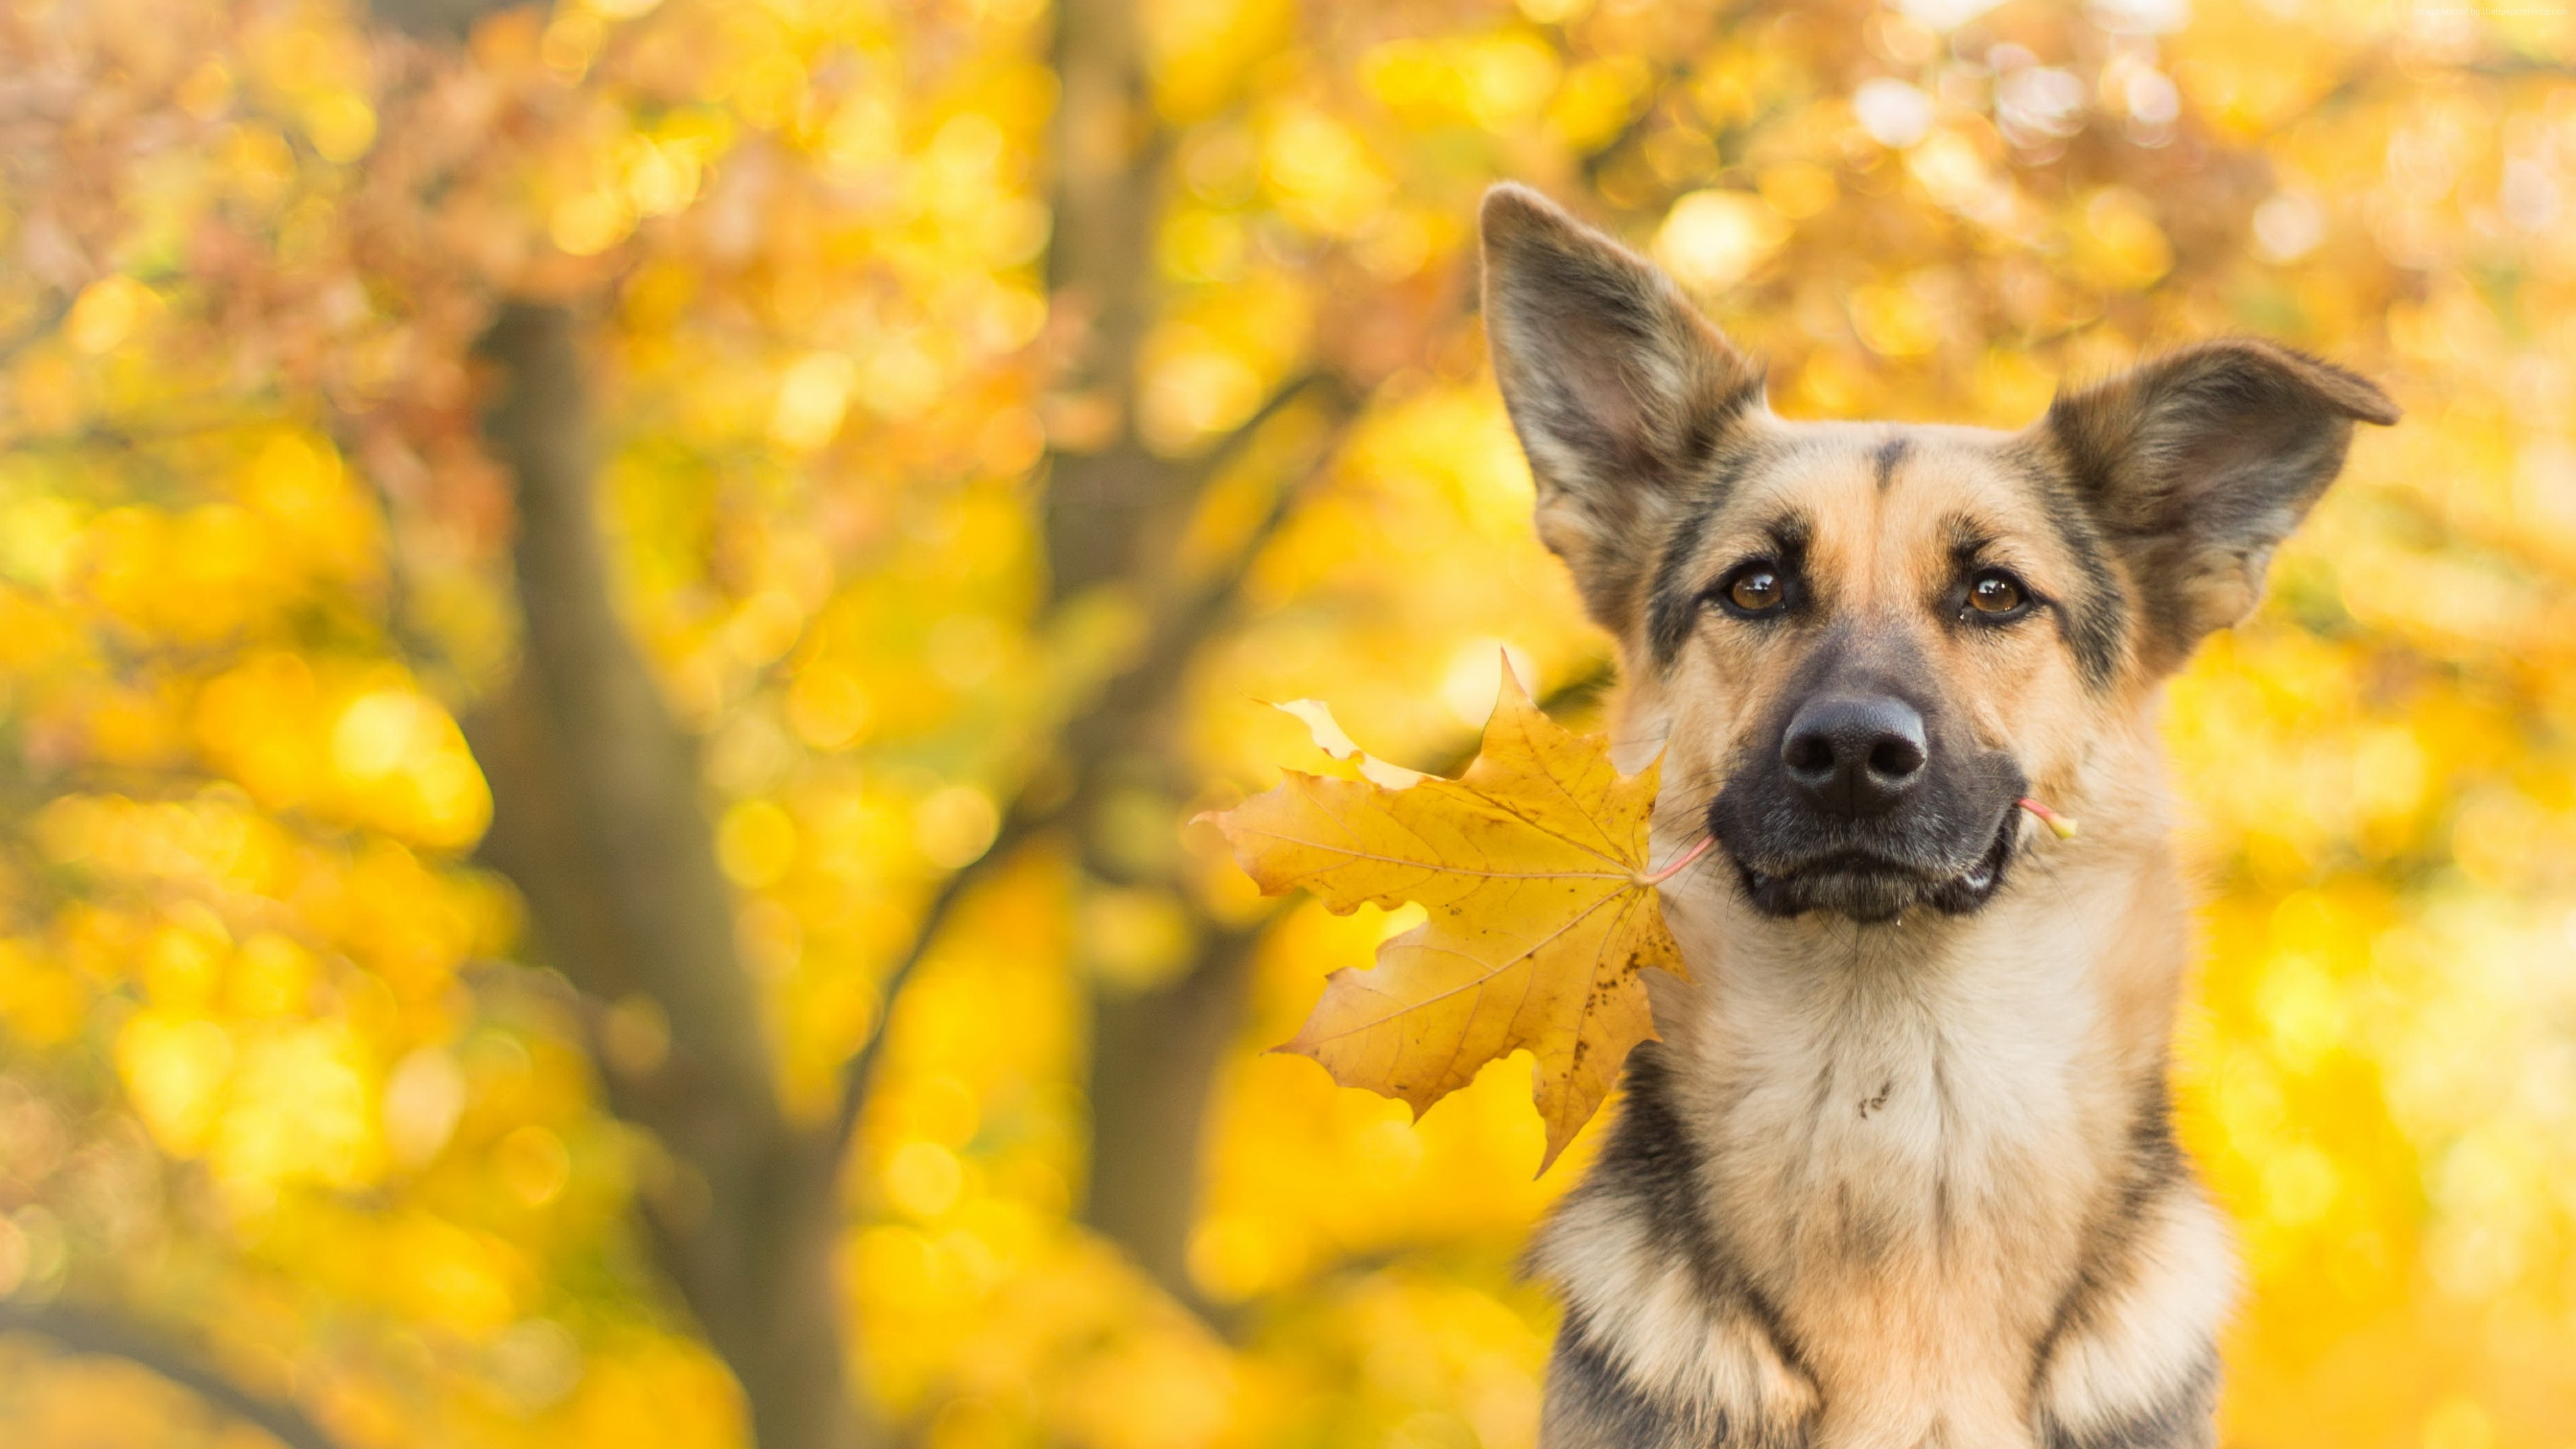 German shepherd dog with yellow autumn leaf in the teeth desktop wallpapers x